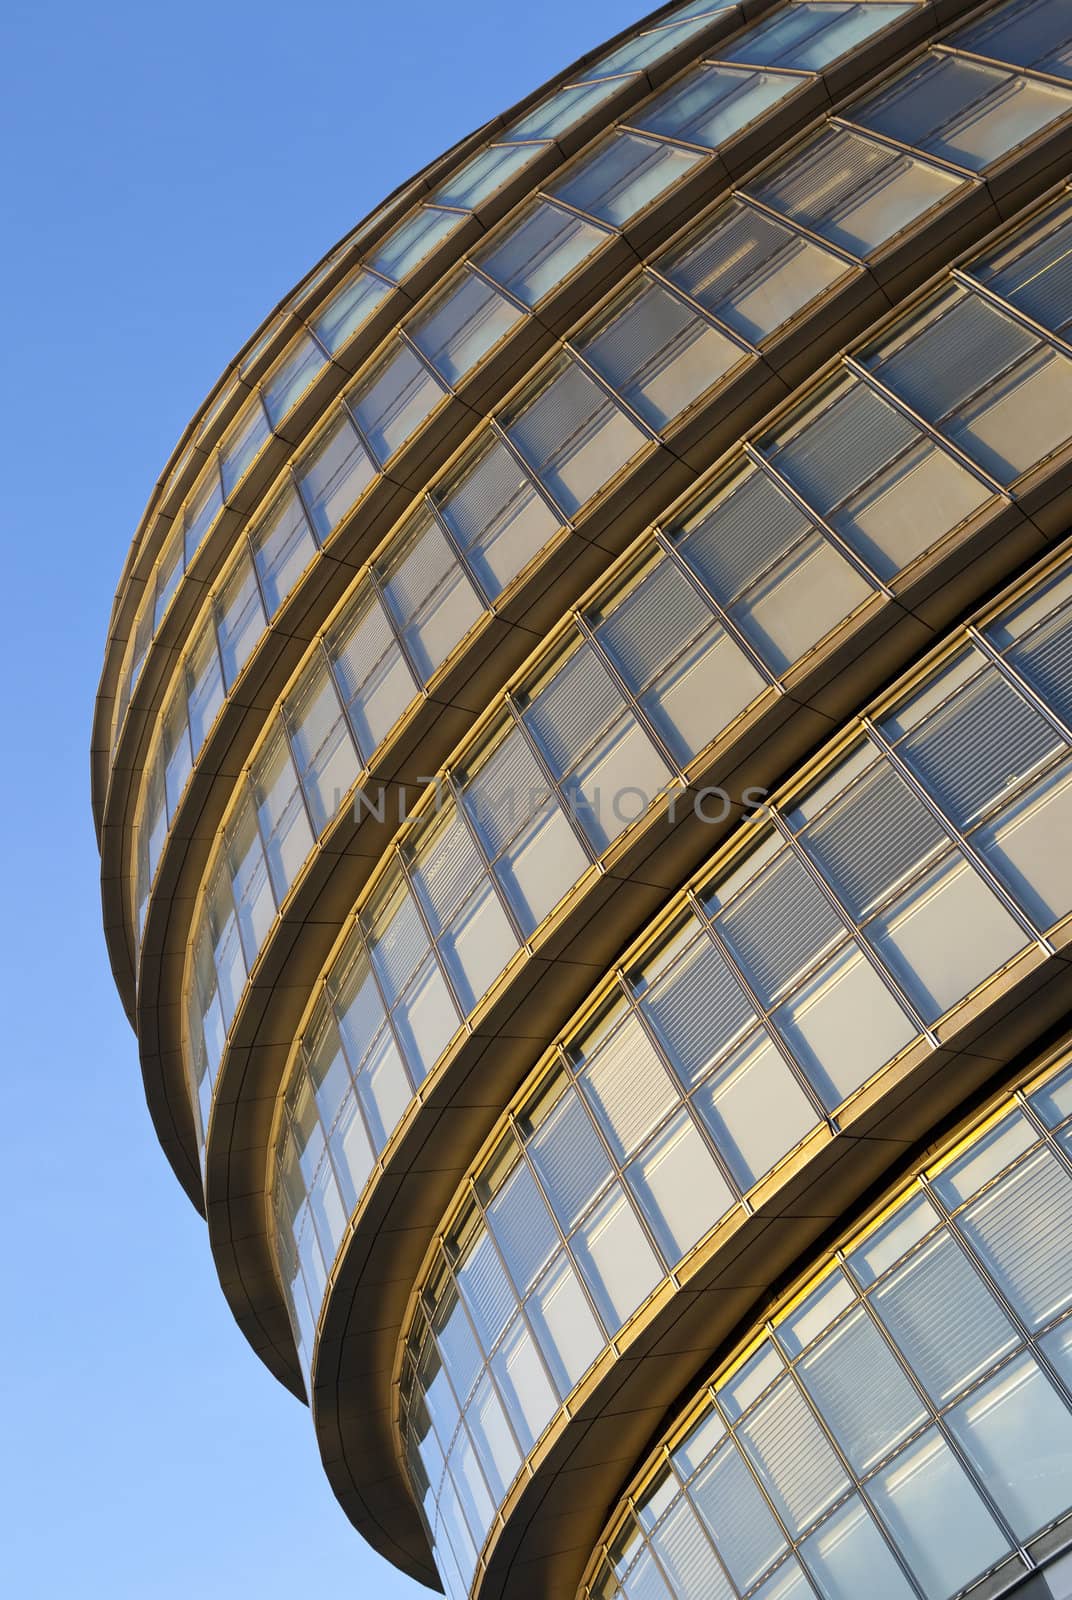 London Assembly Building in London by chrisdorney